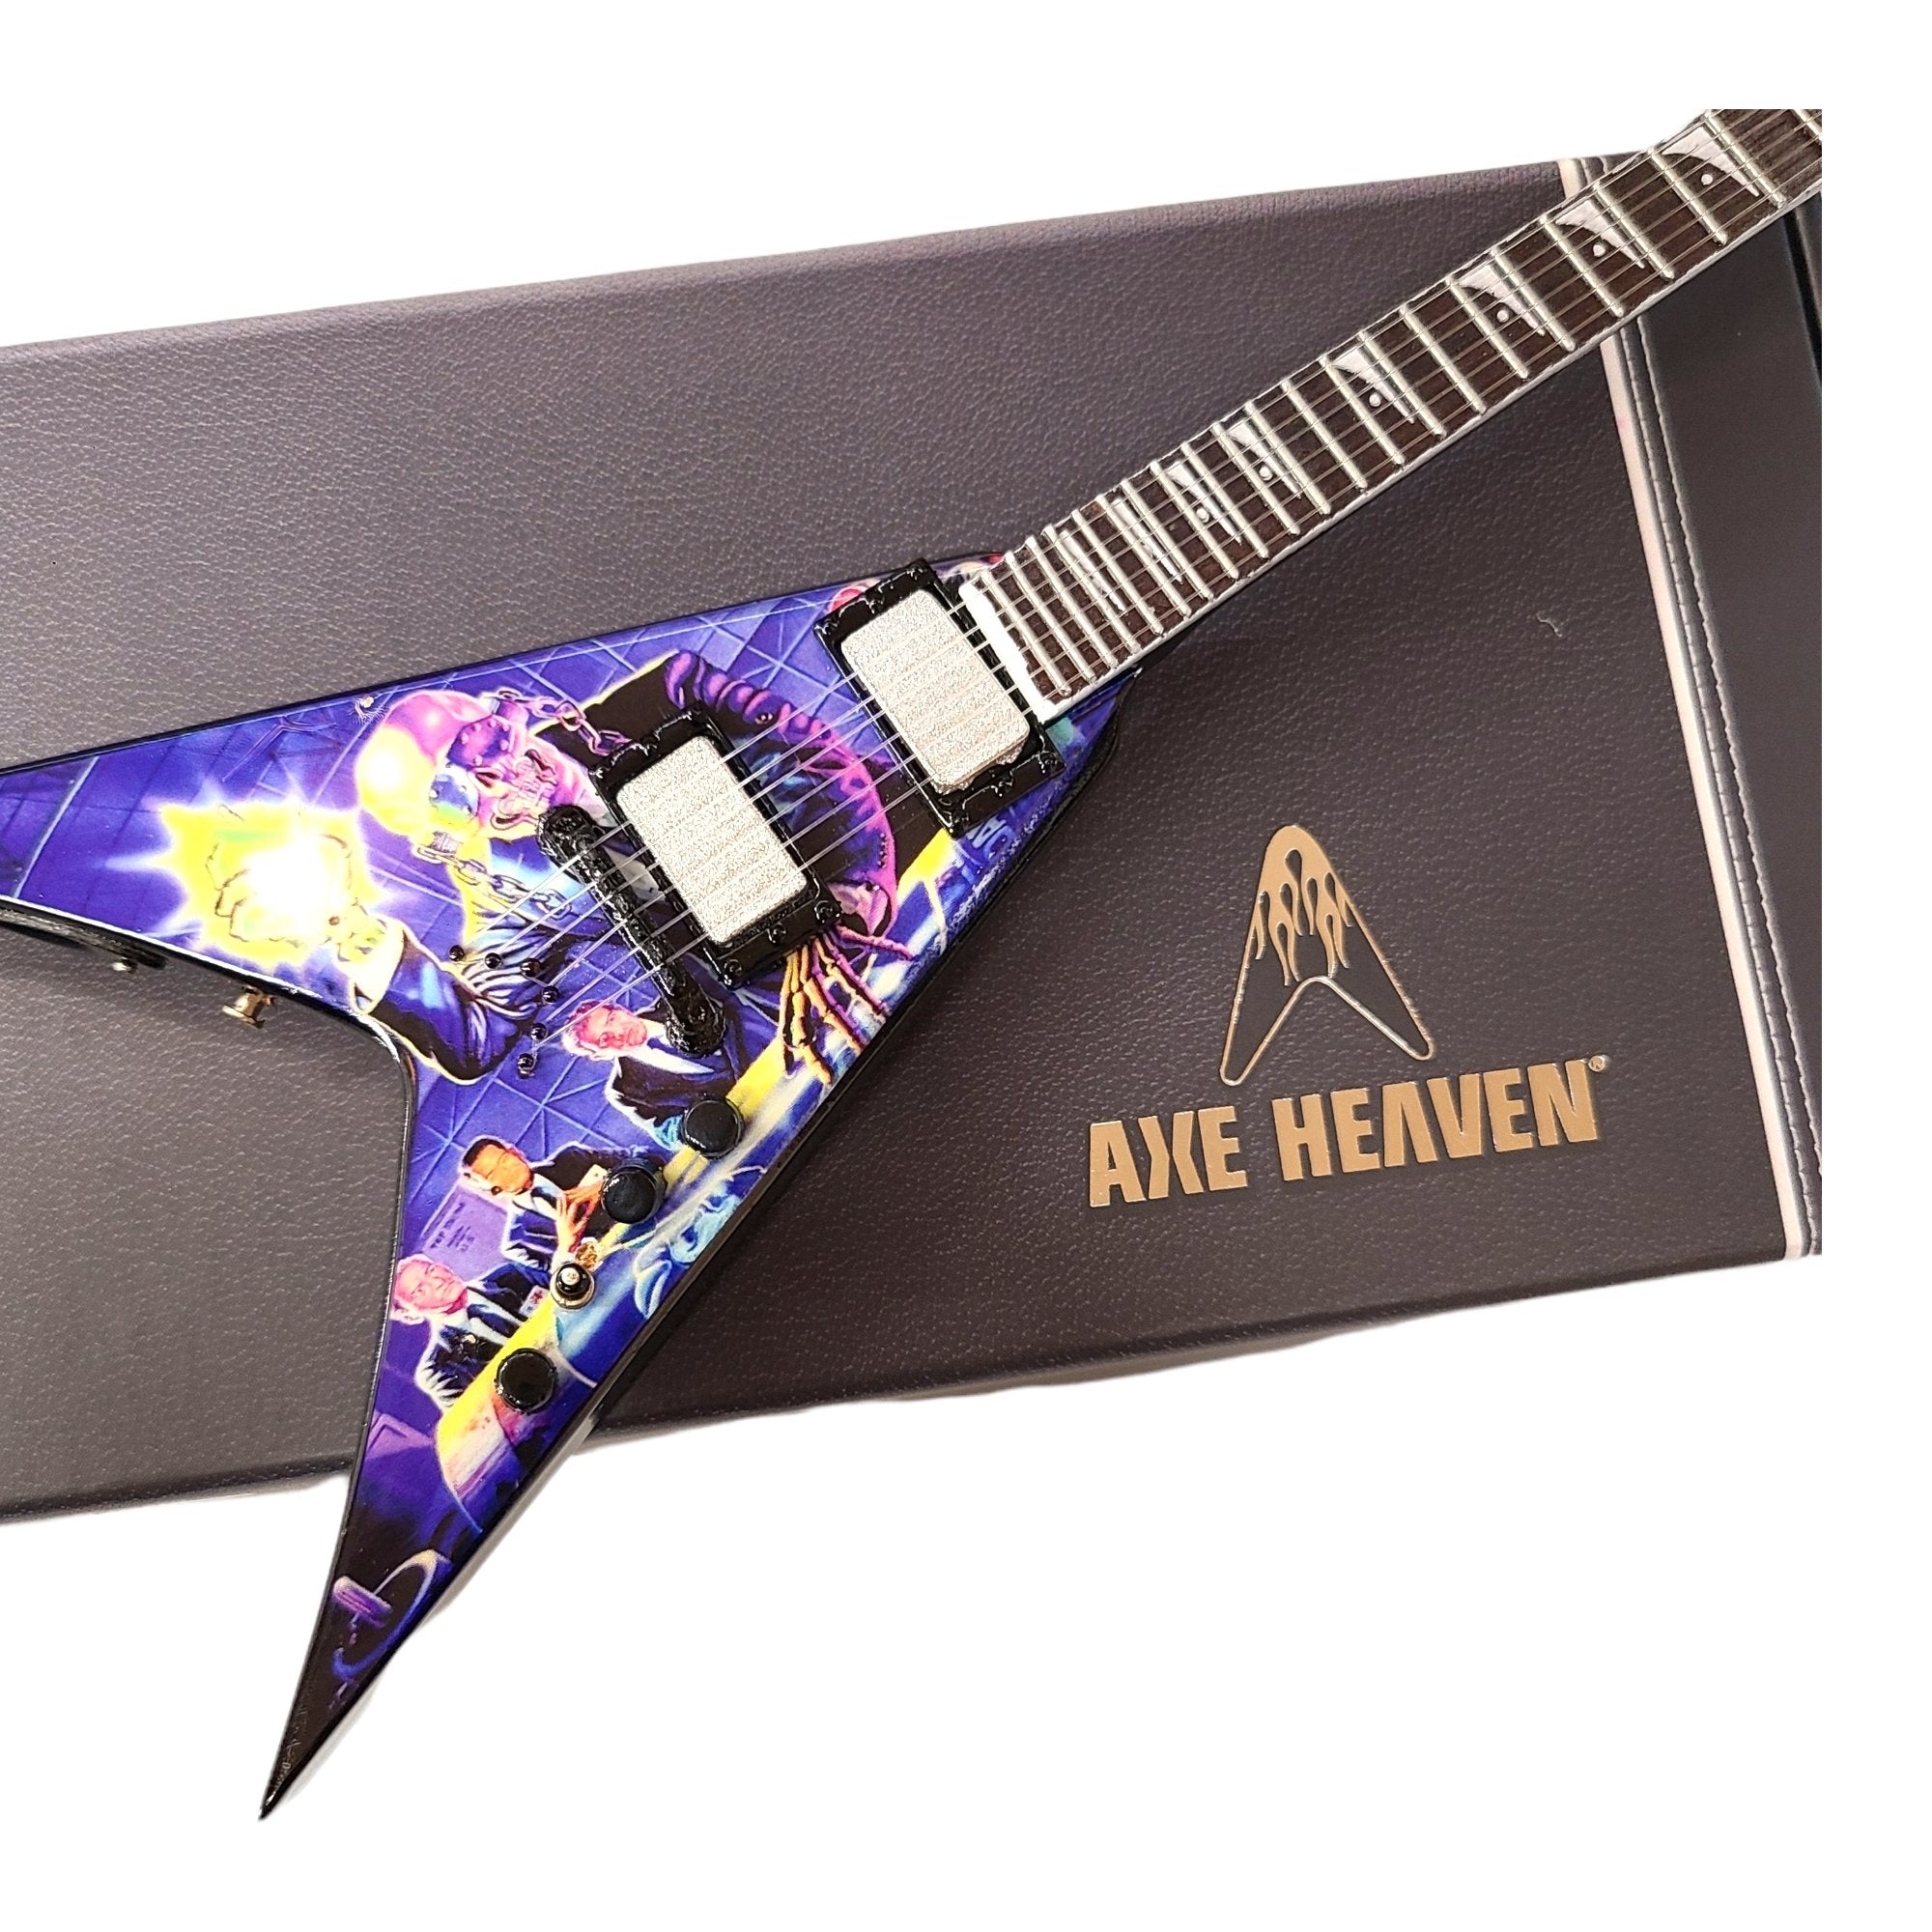 Axe Heaven Megadeth Rust In Peace Mini Guitar Replica